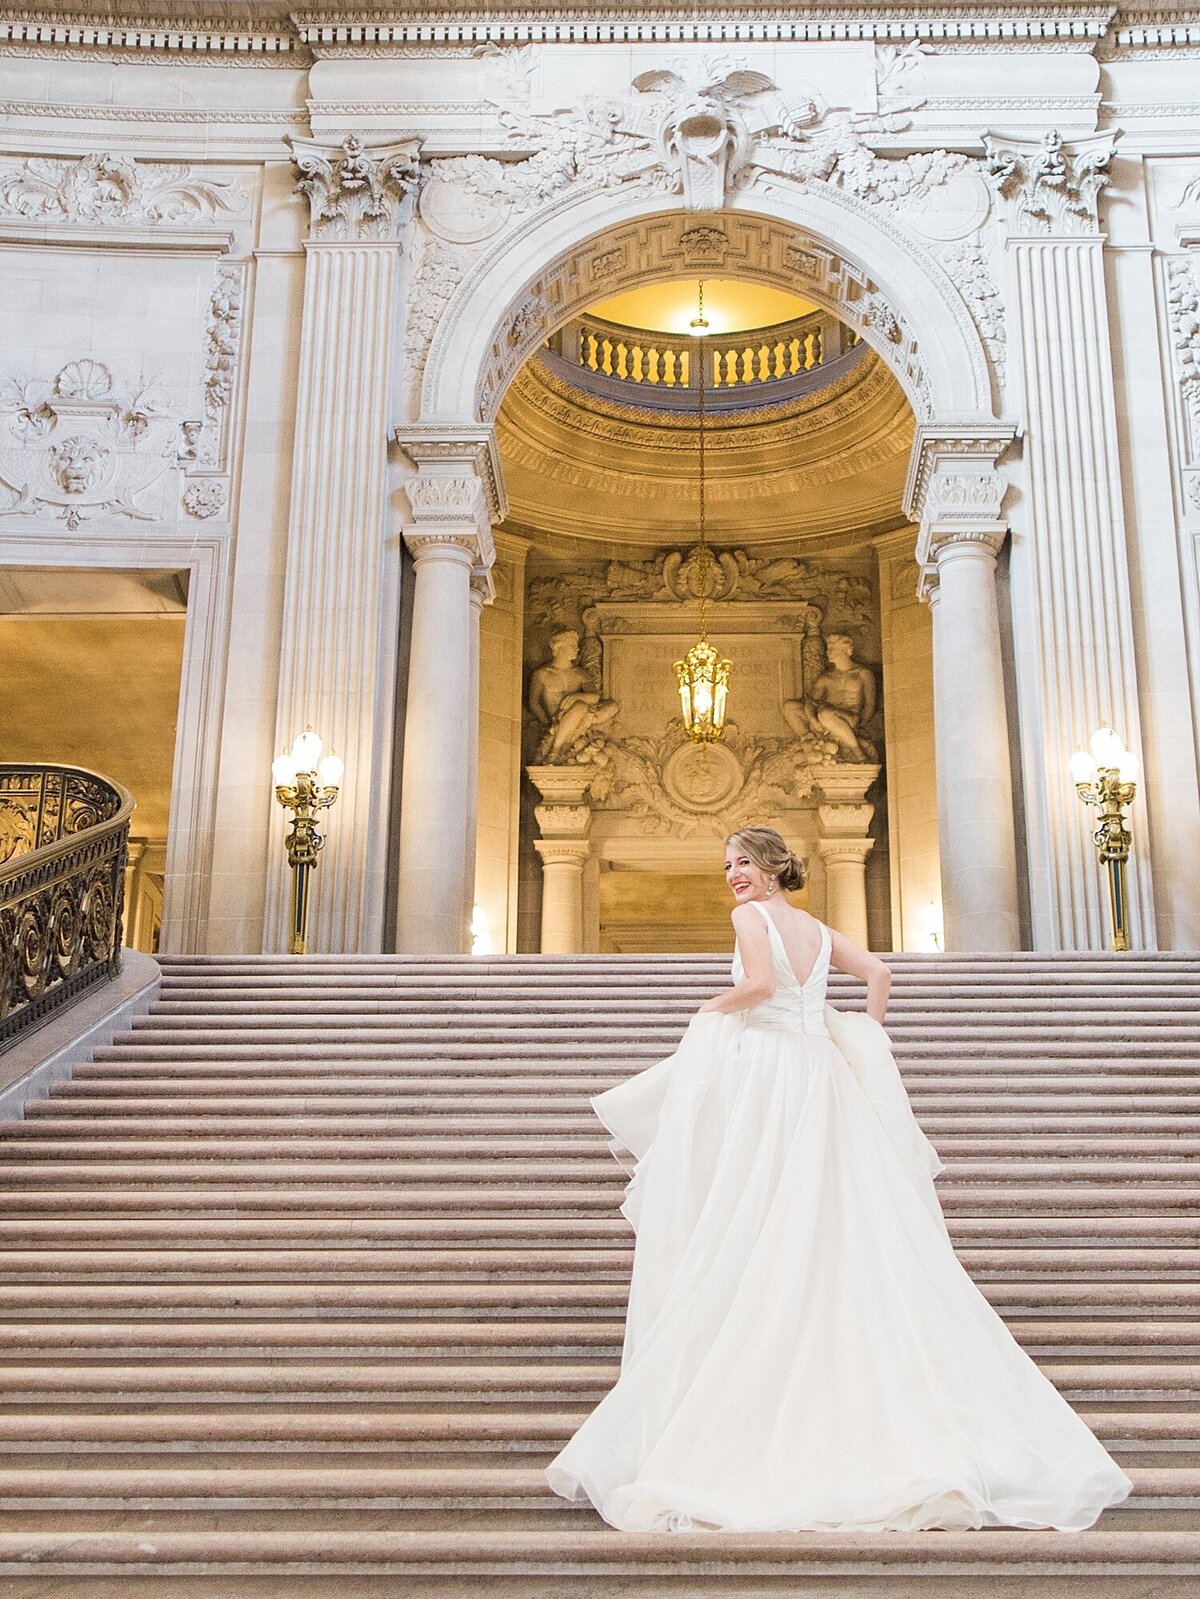 San_Francisco_City_Hall_grand_staircase_wedding_ceremony-060